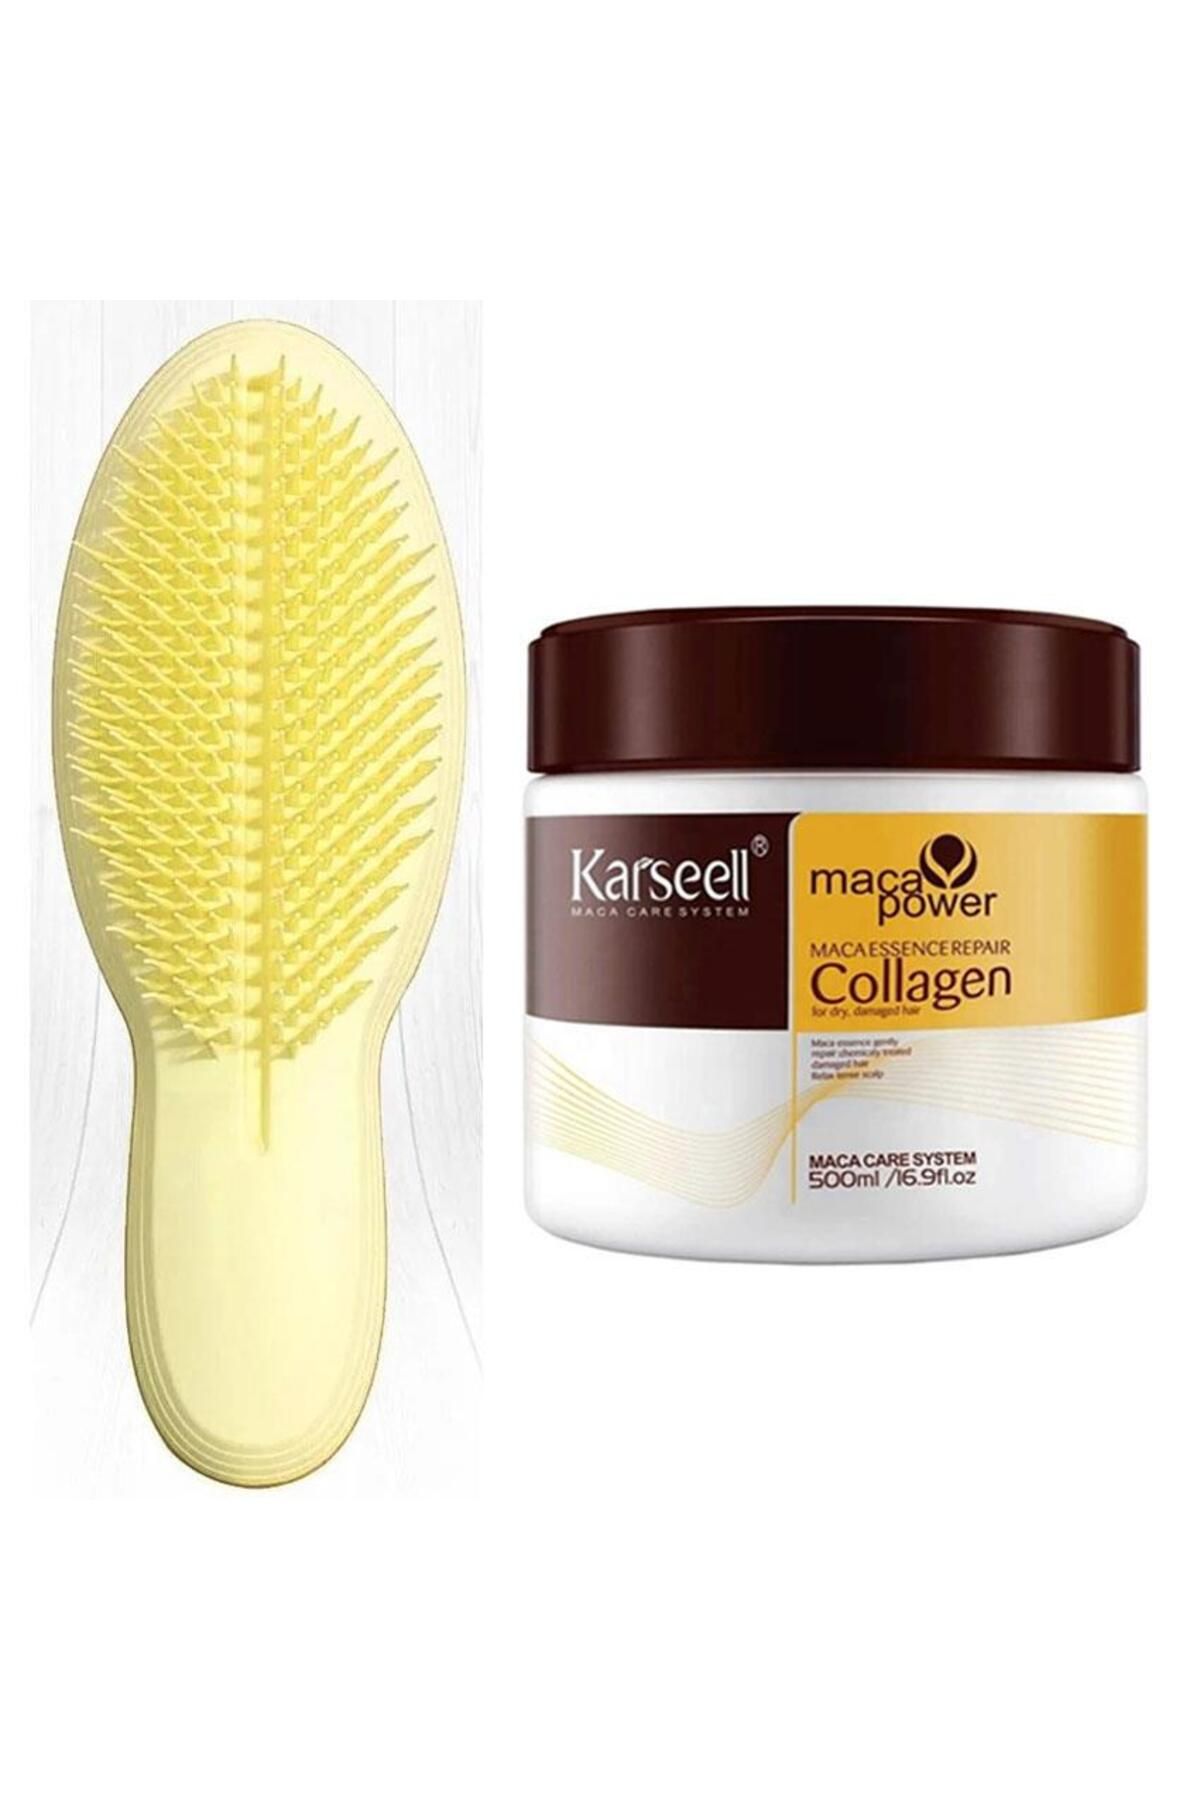 Fontenay Karseell Collagen Saçmaskesi&buğdayprotein 500 ml Carelly Palm Theultimate Saçfırçası 2'lise